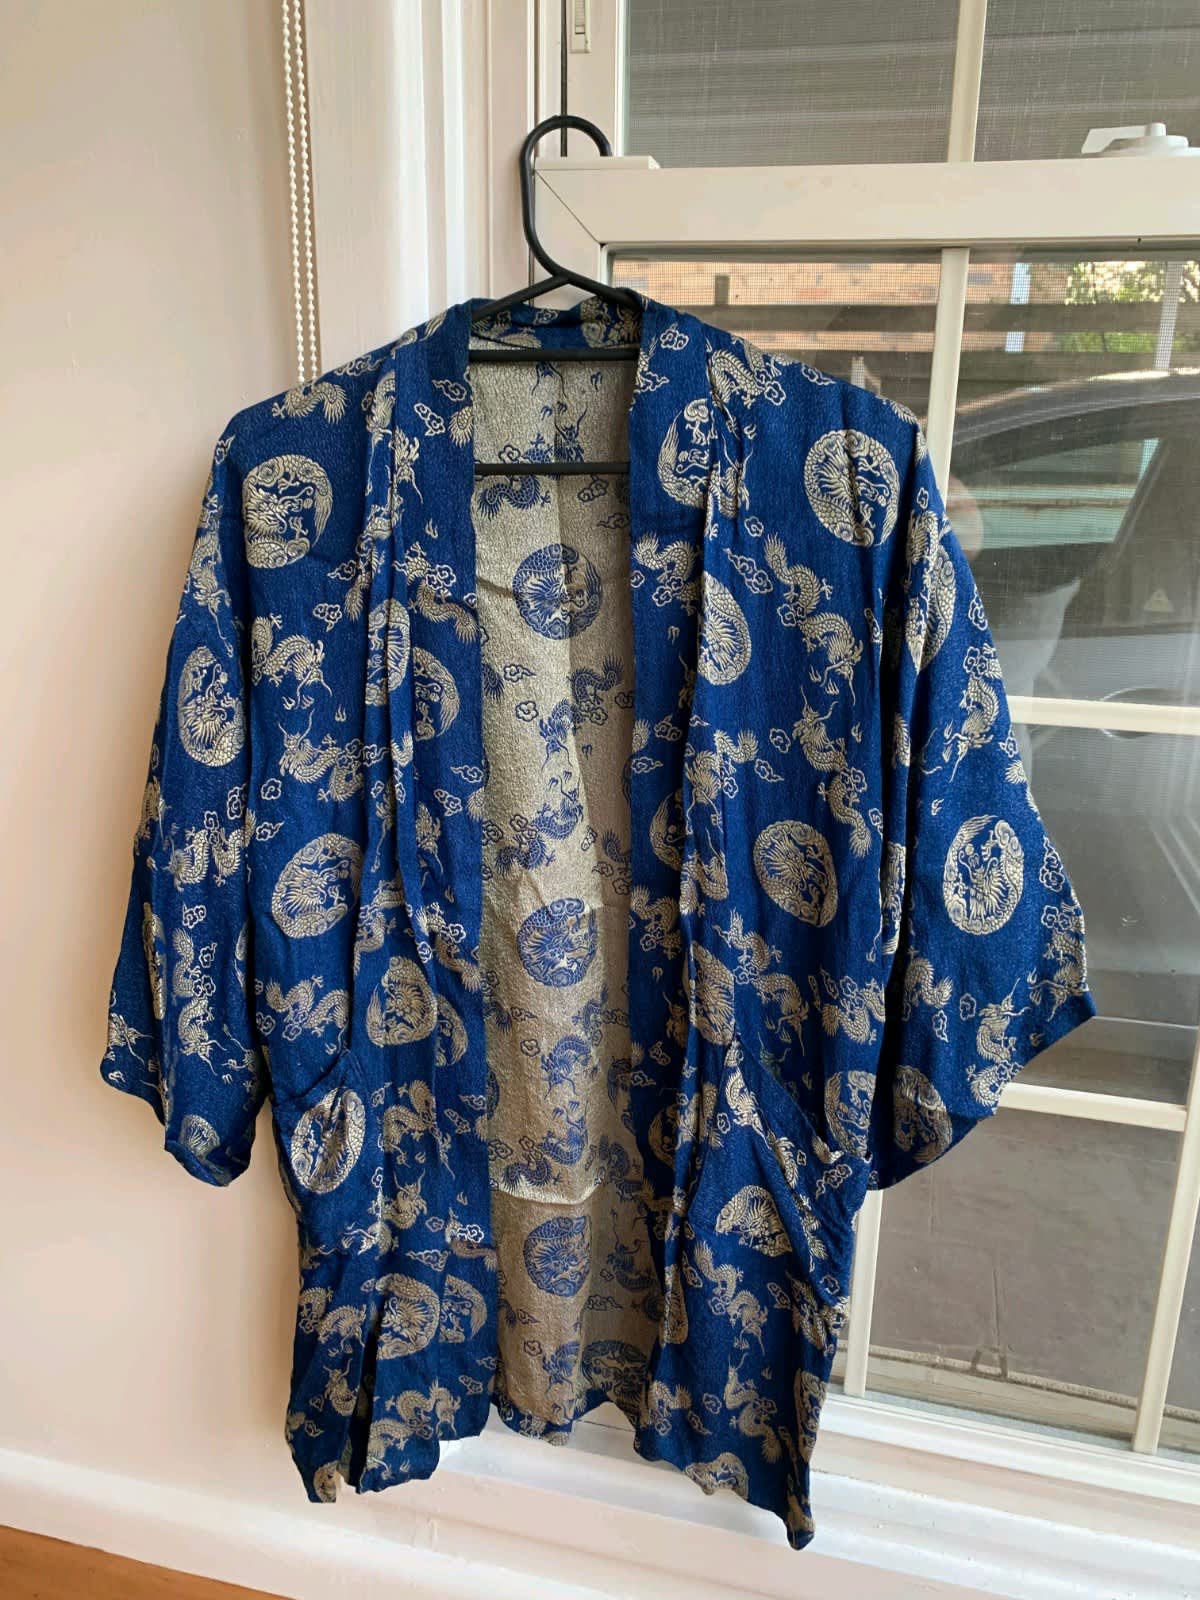 kimonos | Gumtree Australia Free Local Classifieds